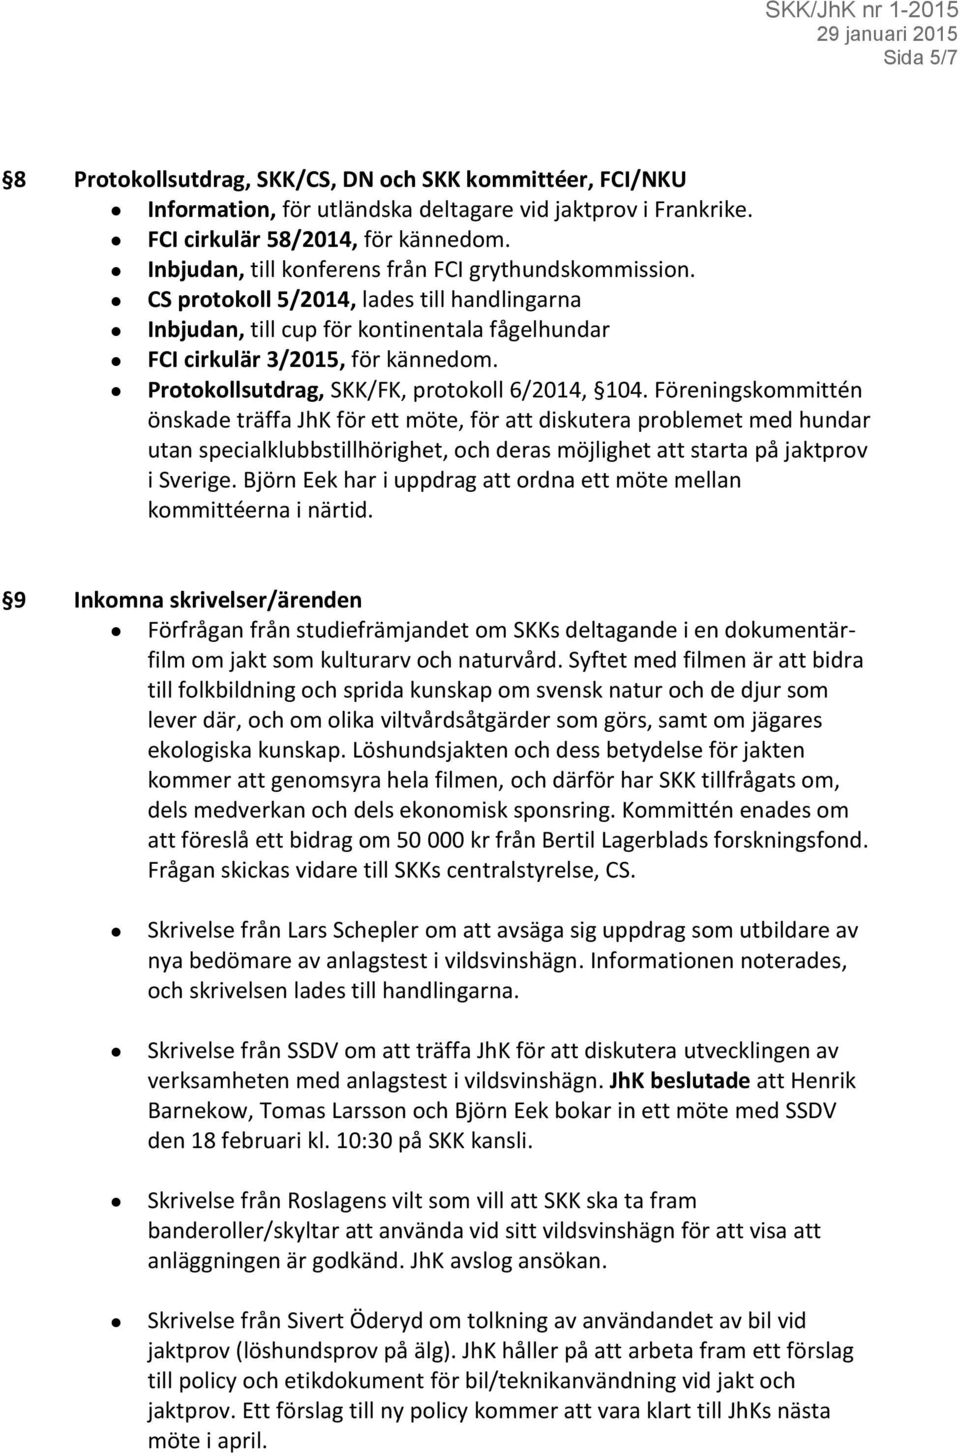 Protokollsutdrag, SKK/FK, protokoll 6/2014, 104.